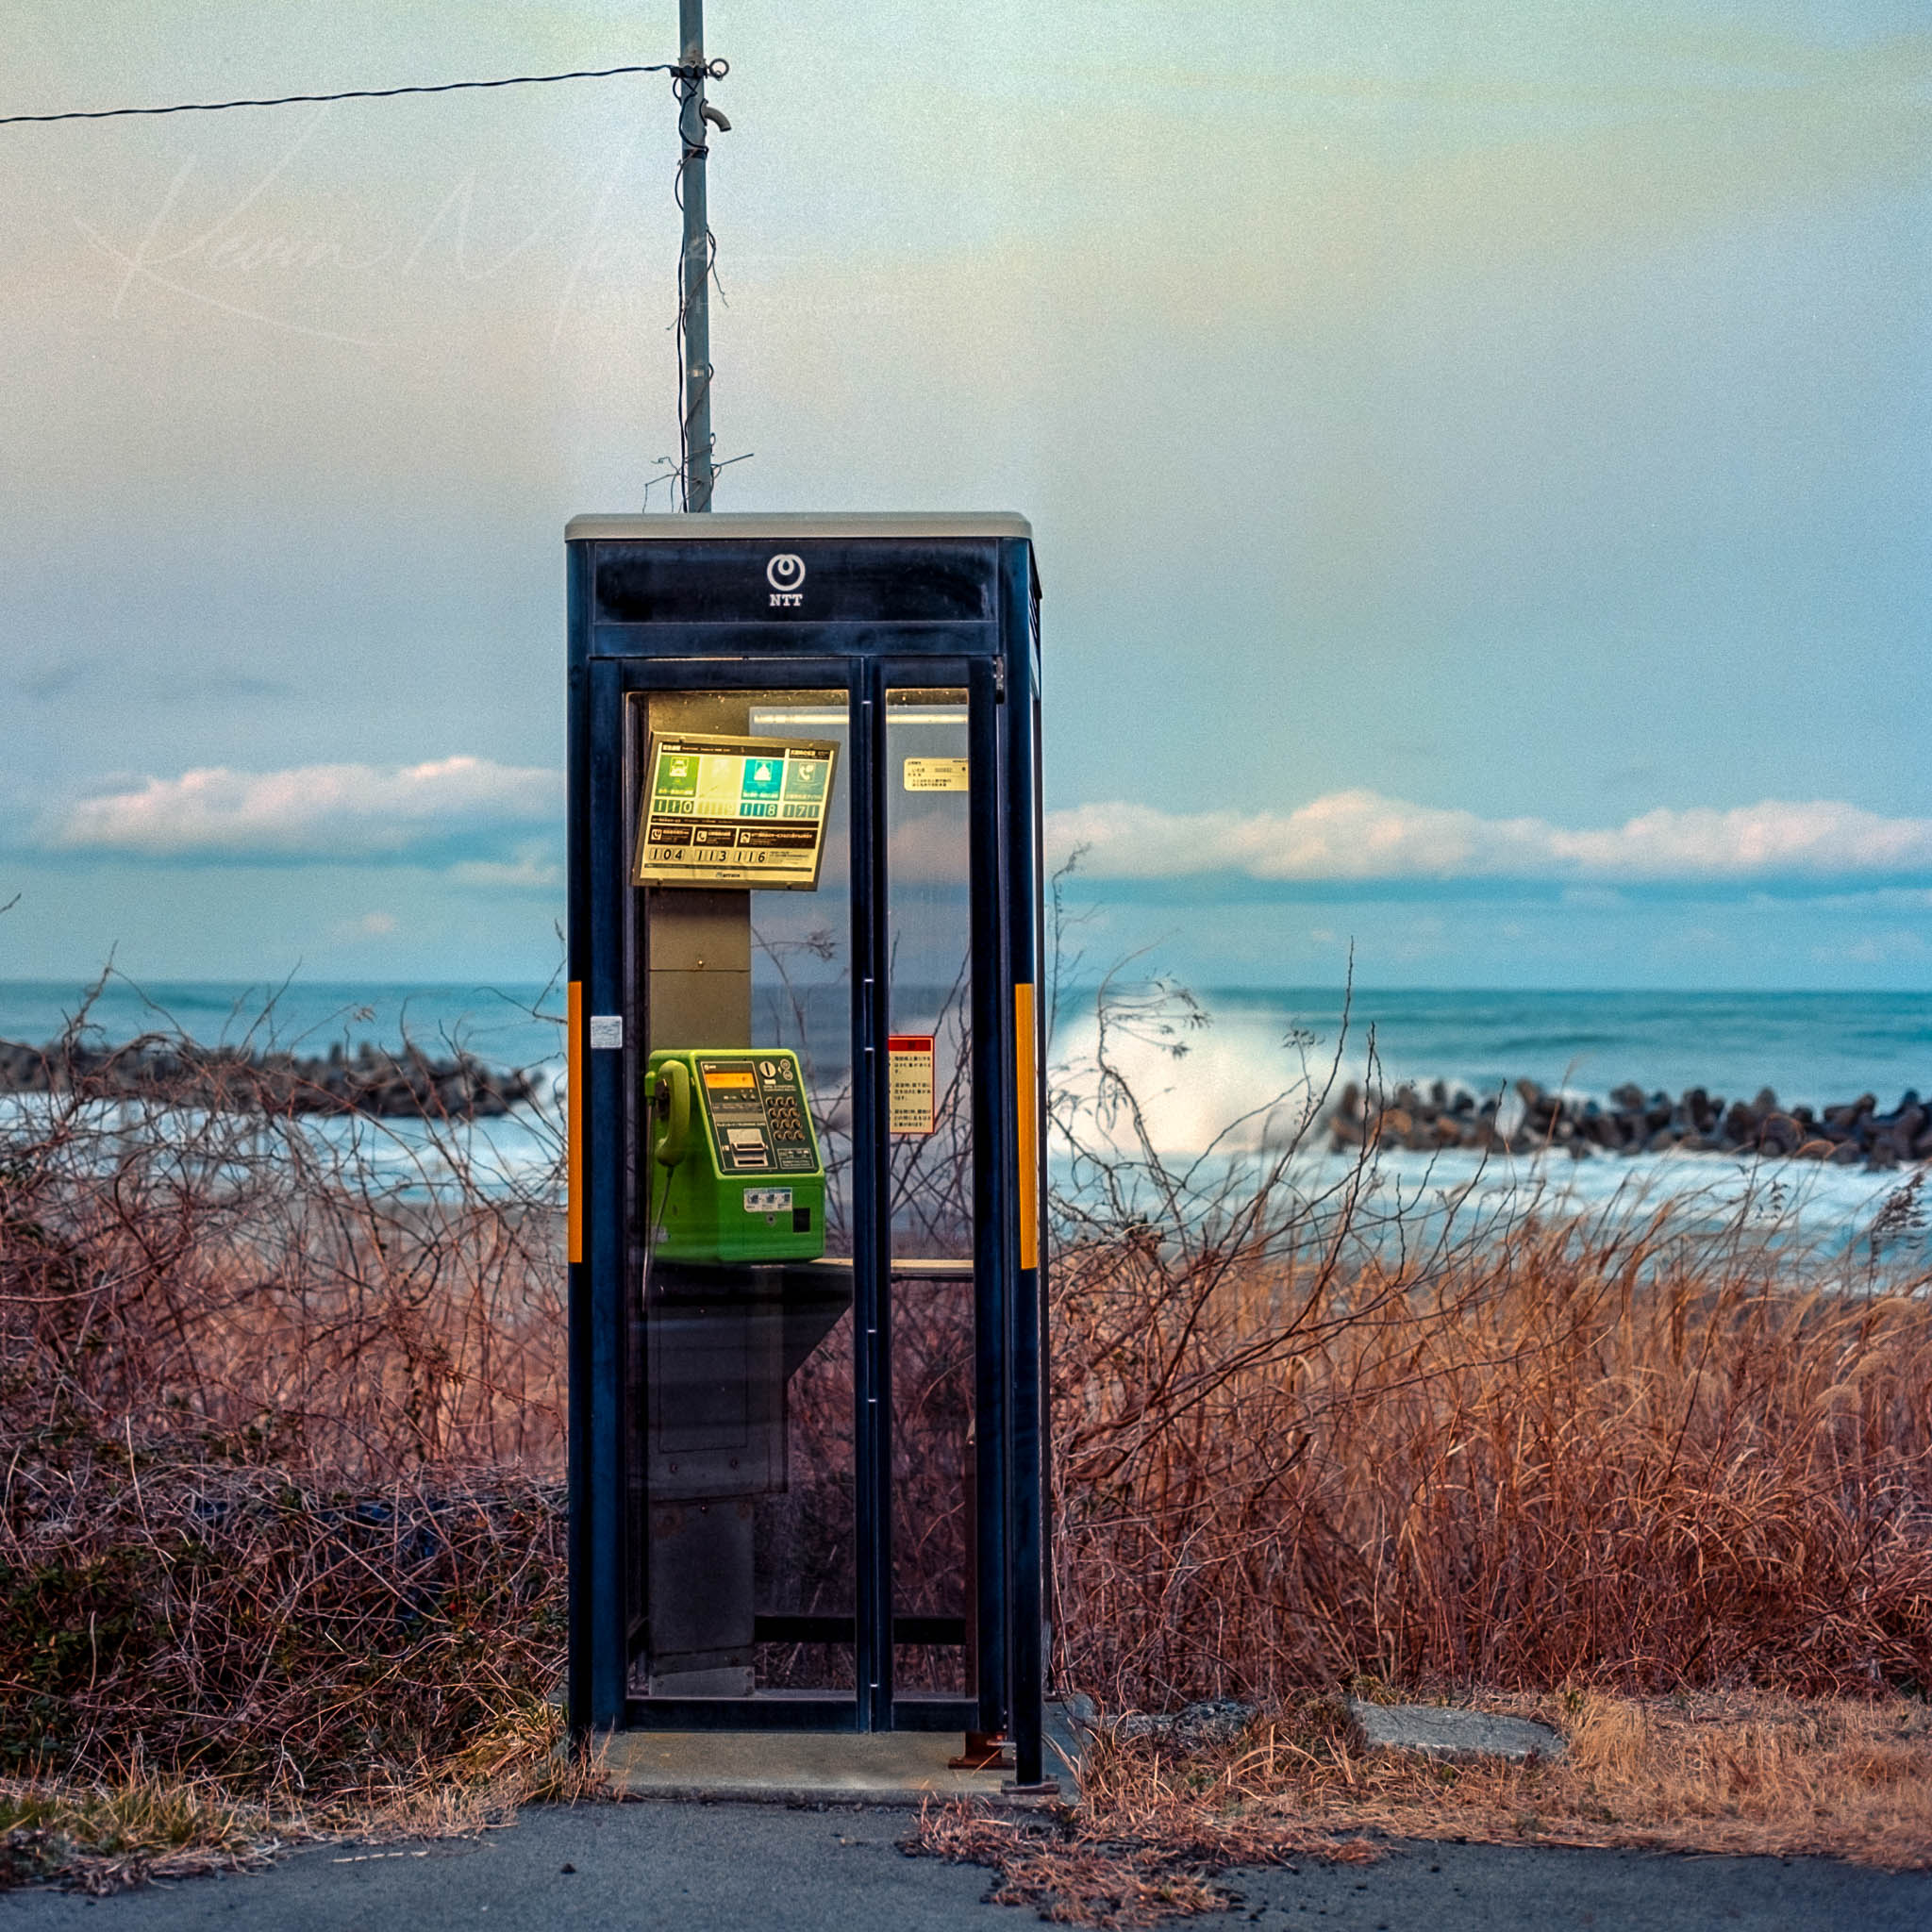 Vintage public phone booth against tranquil rural landscape at twilight.